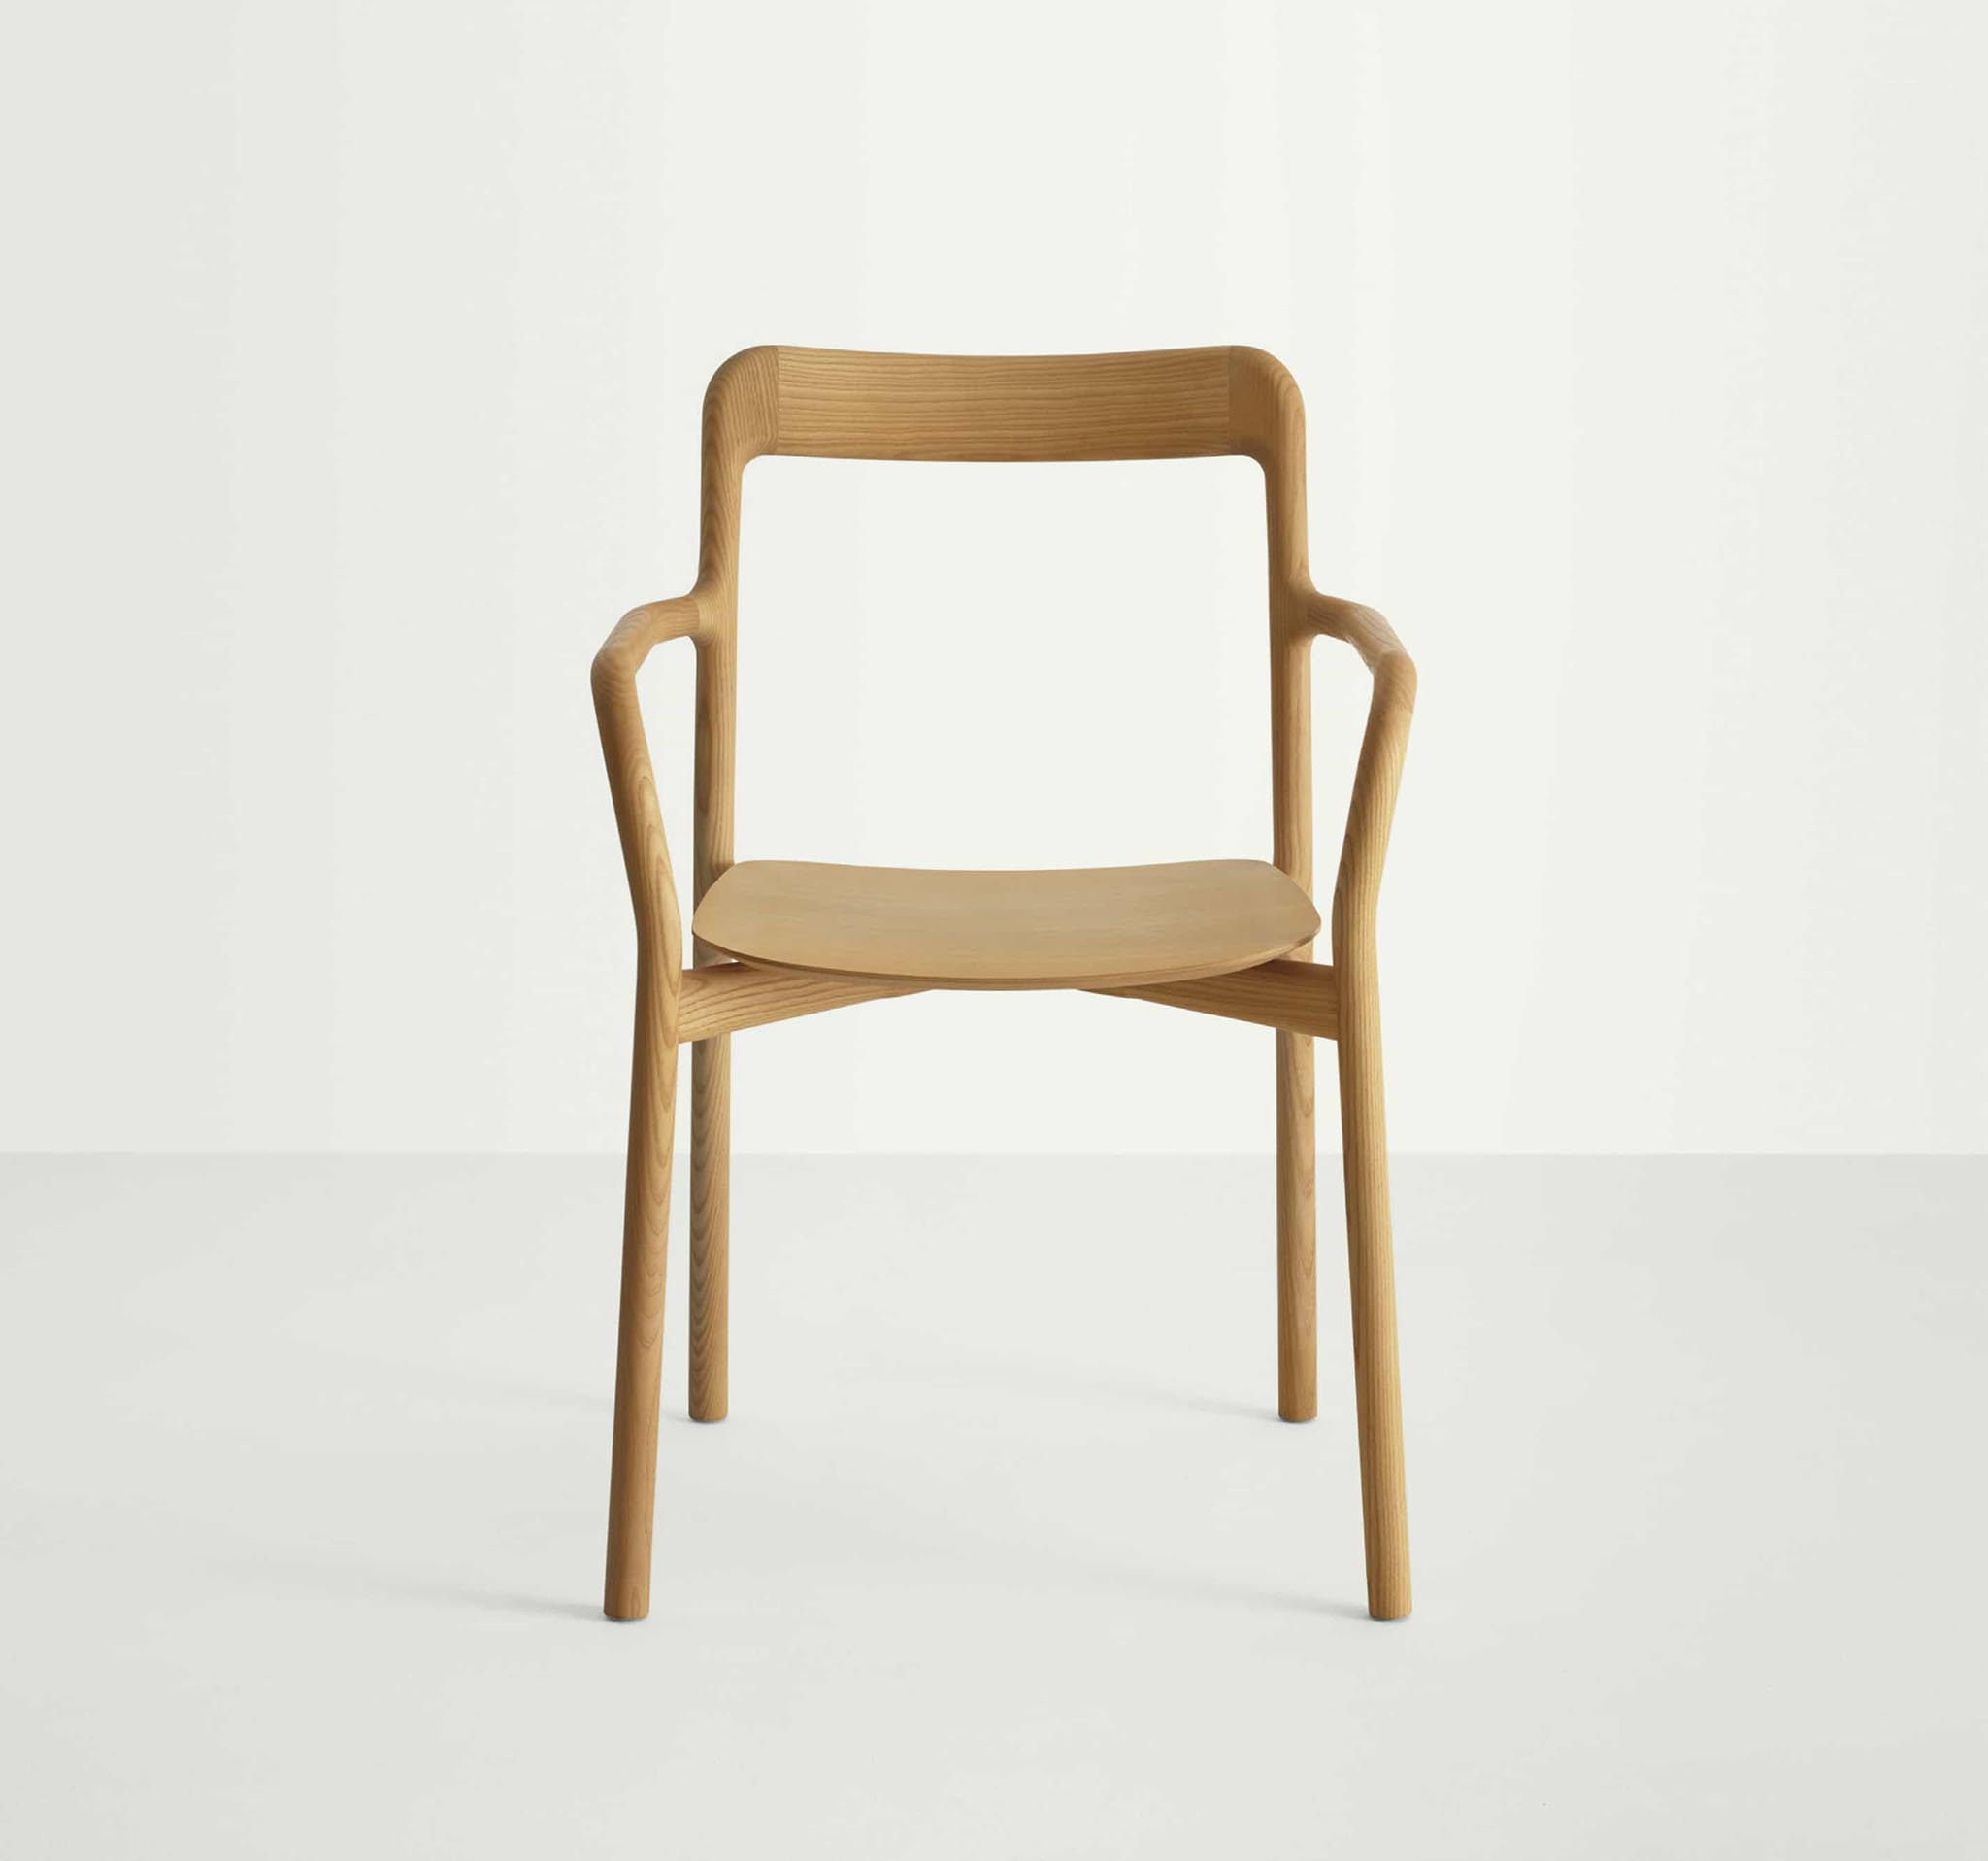 minimalist Branca wood chair by Kim Colin